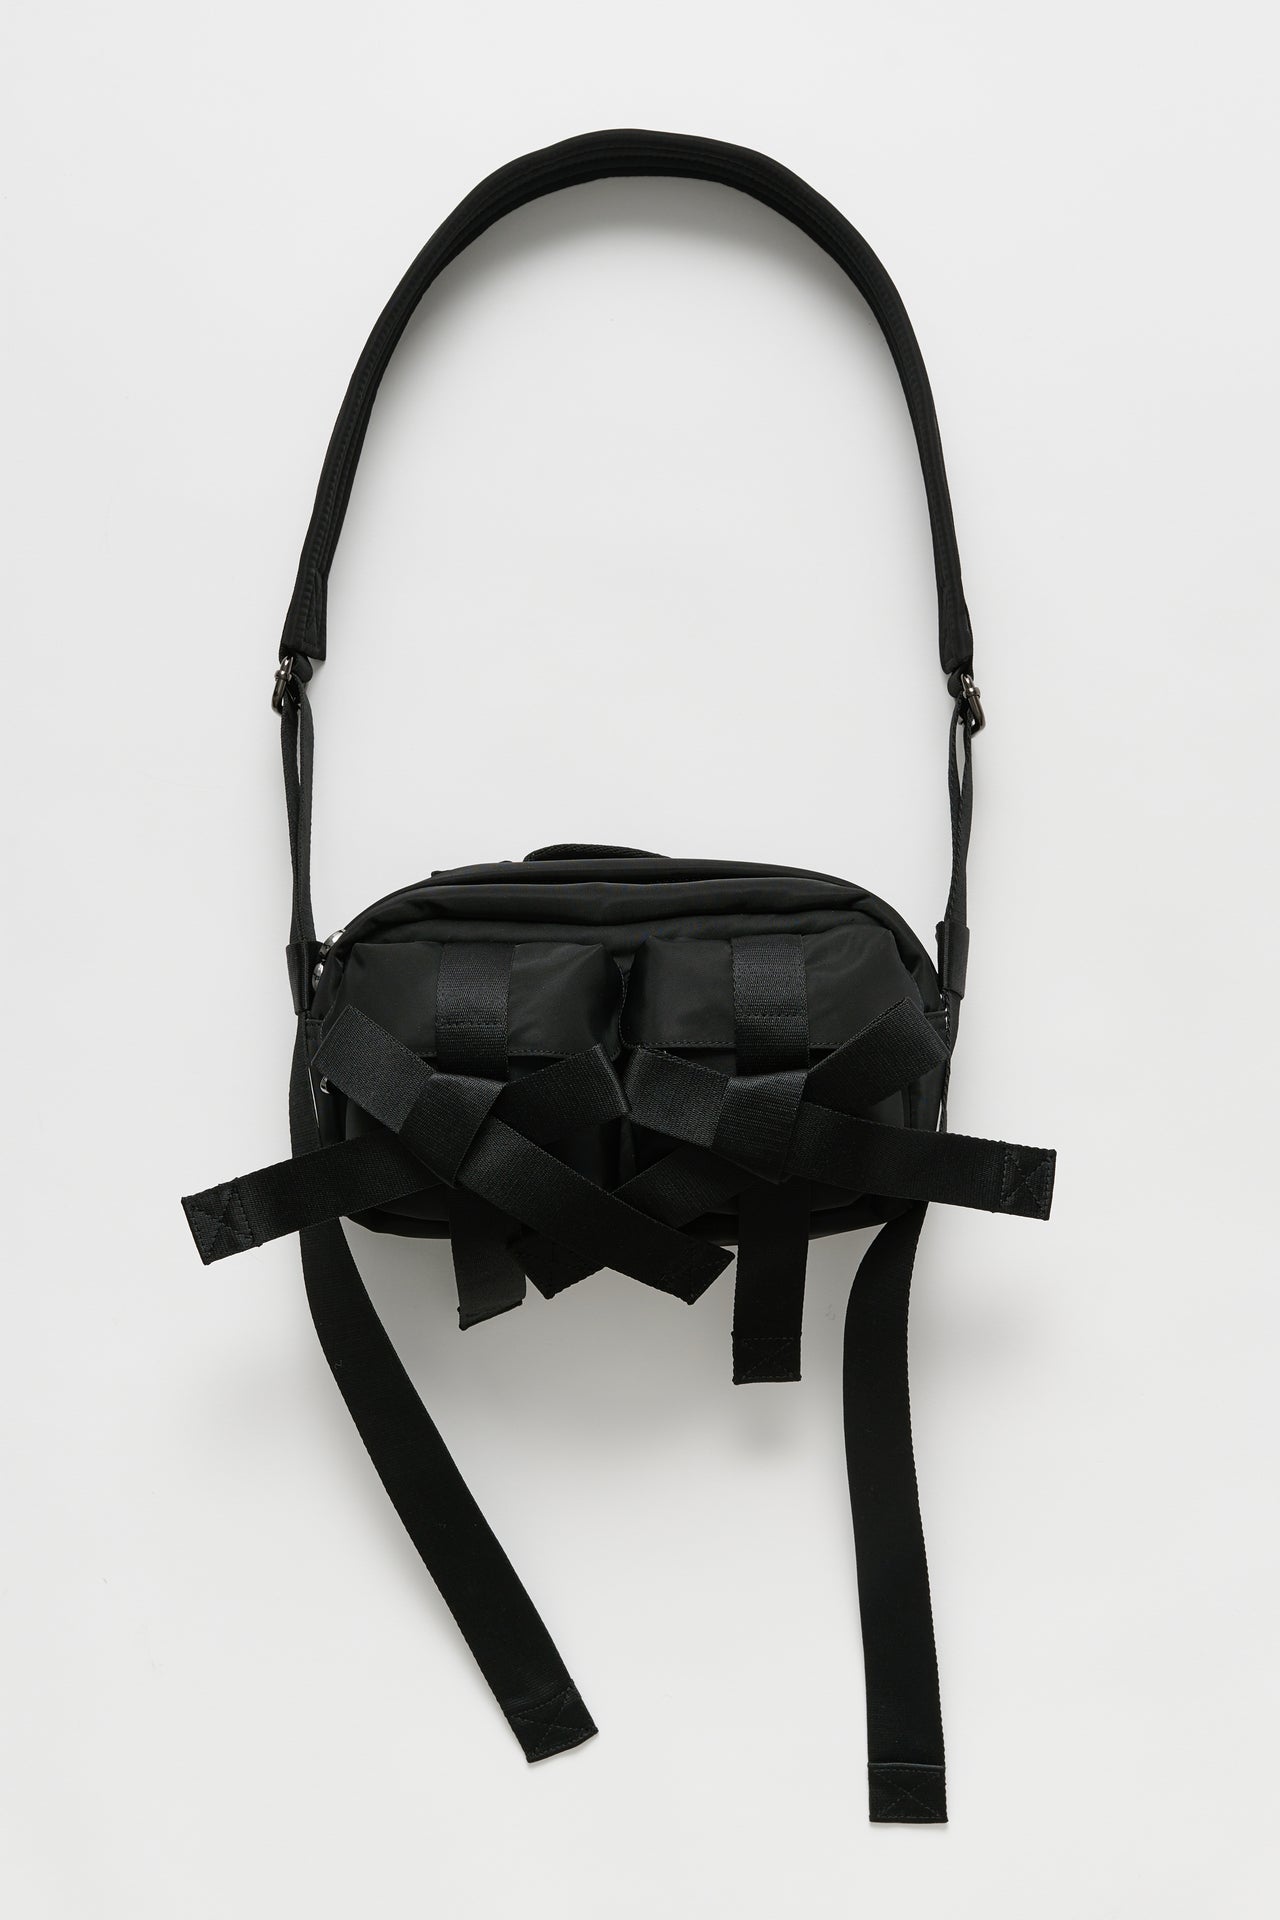 Simone Rocha Classic Bow Crossbody Bag Black